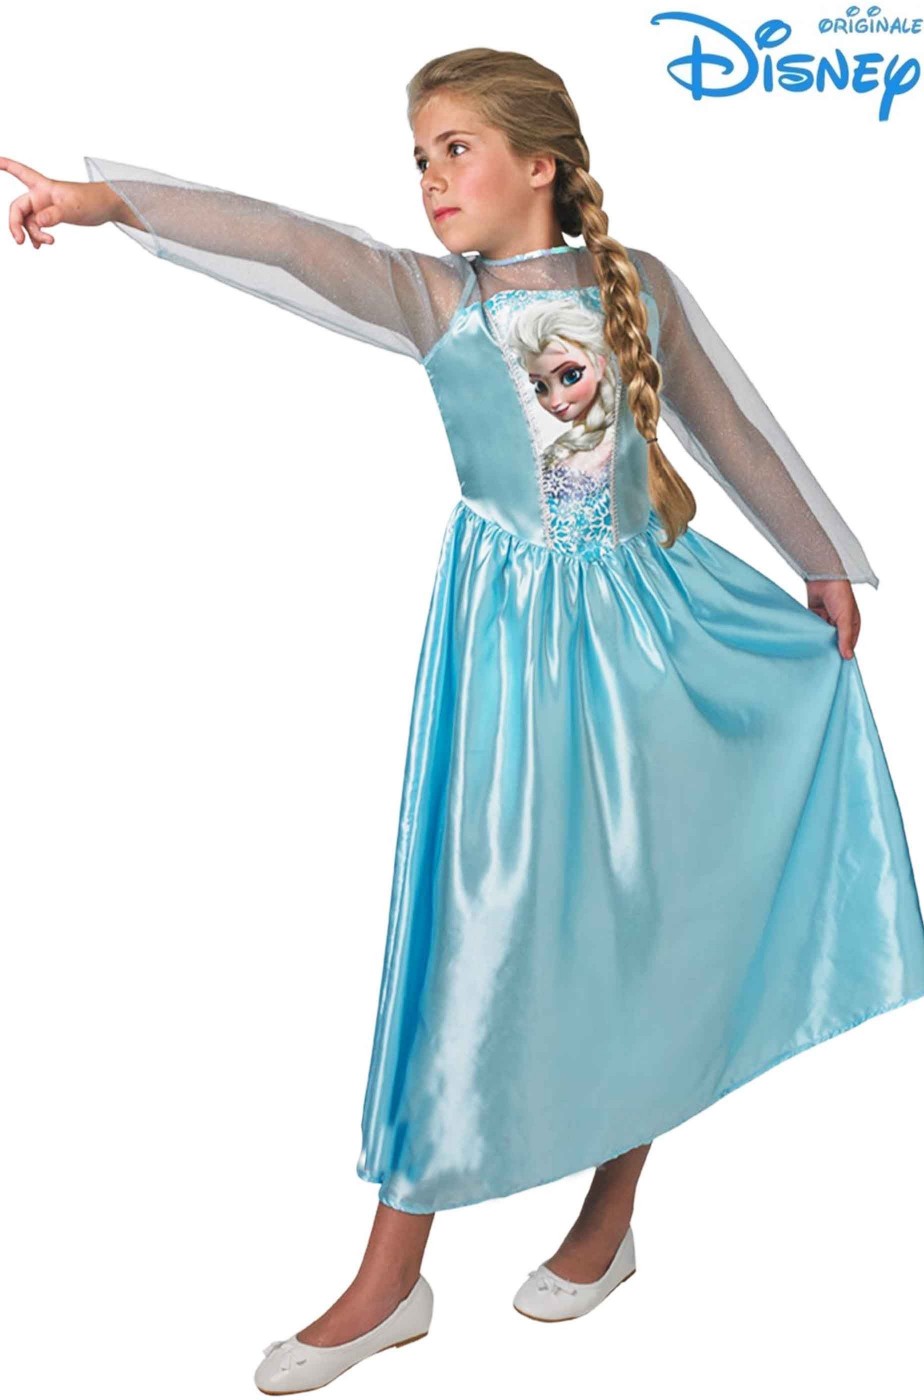 CARNEVALE COSTUME BAMBINA Frozen Elsa originale Disney EUR 35,00 - PicClick  IT